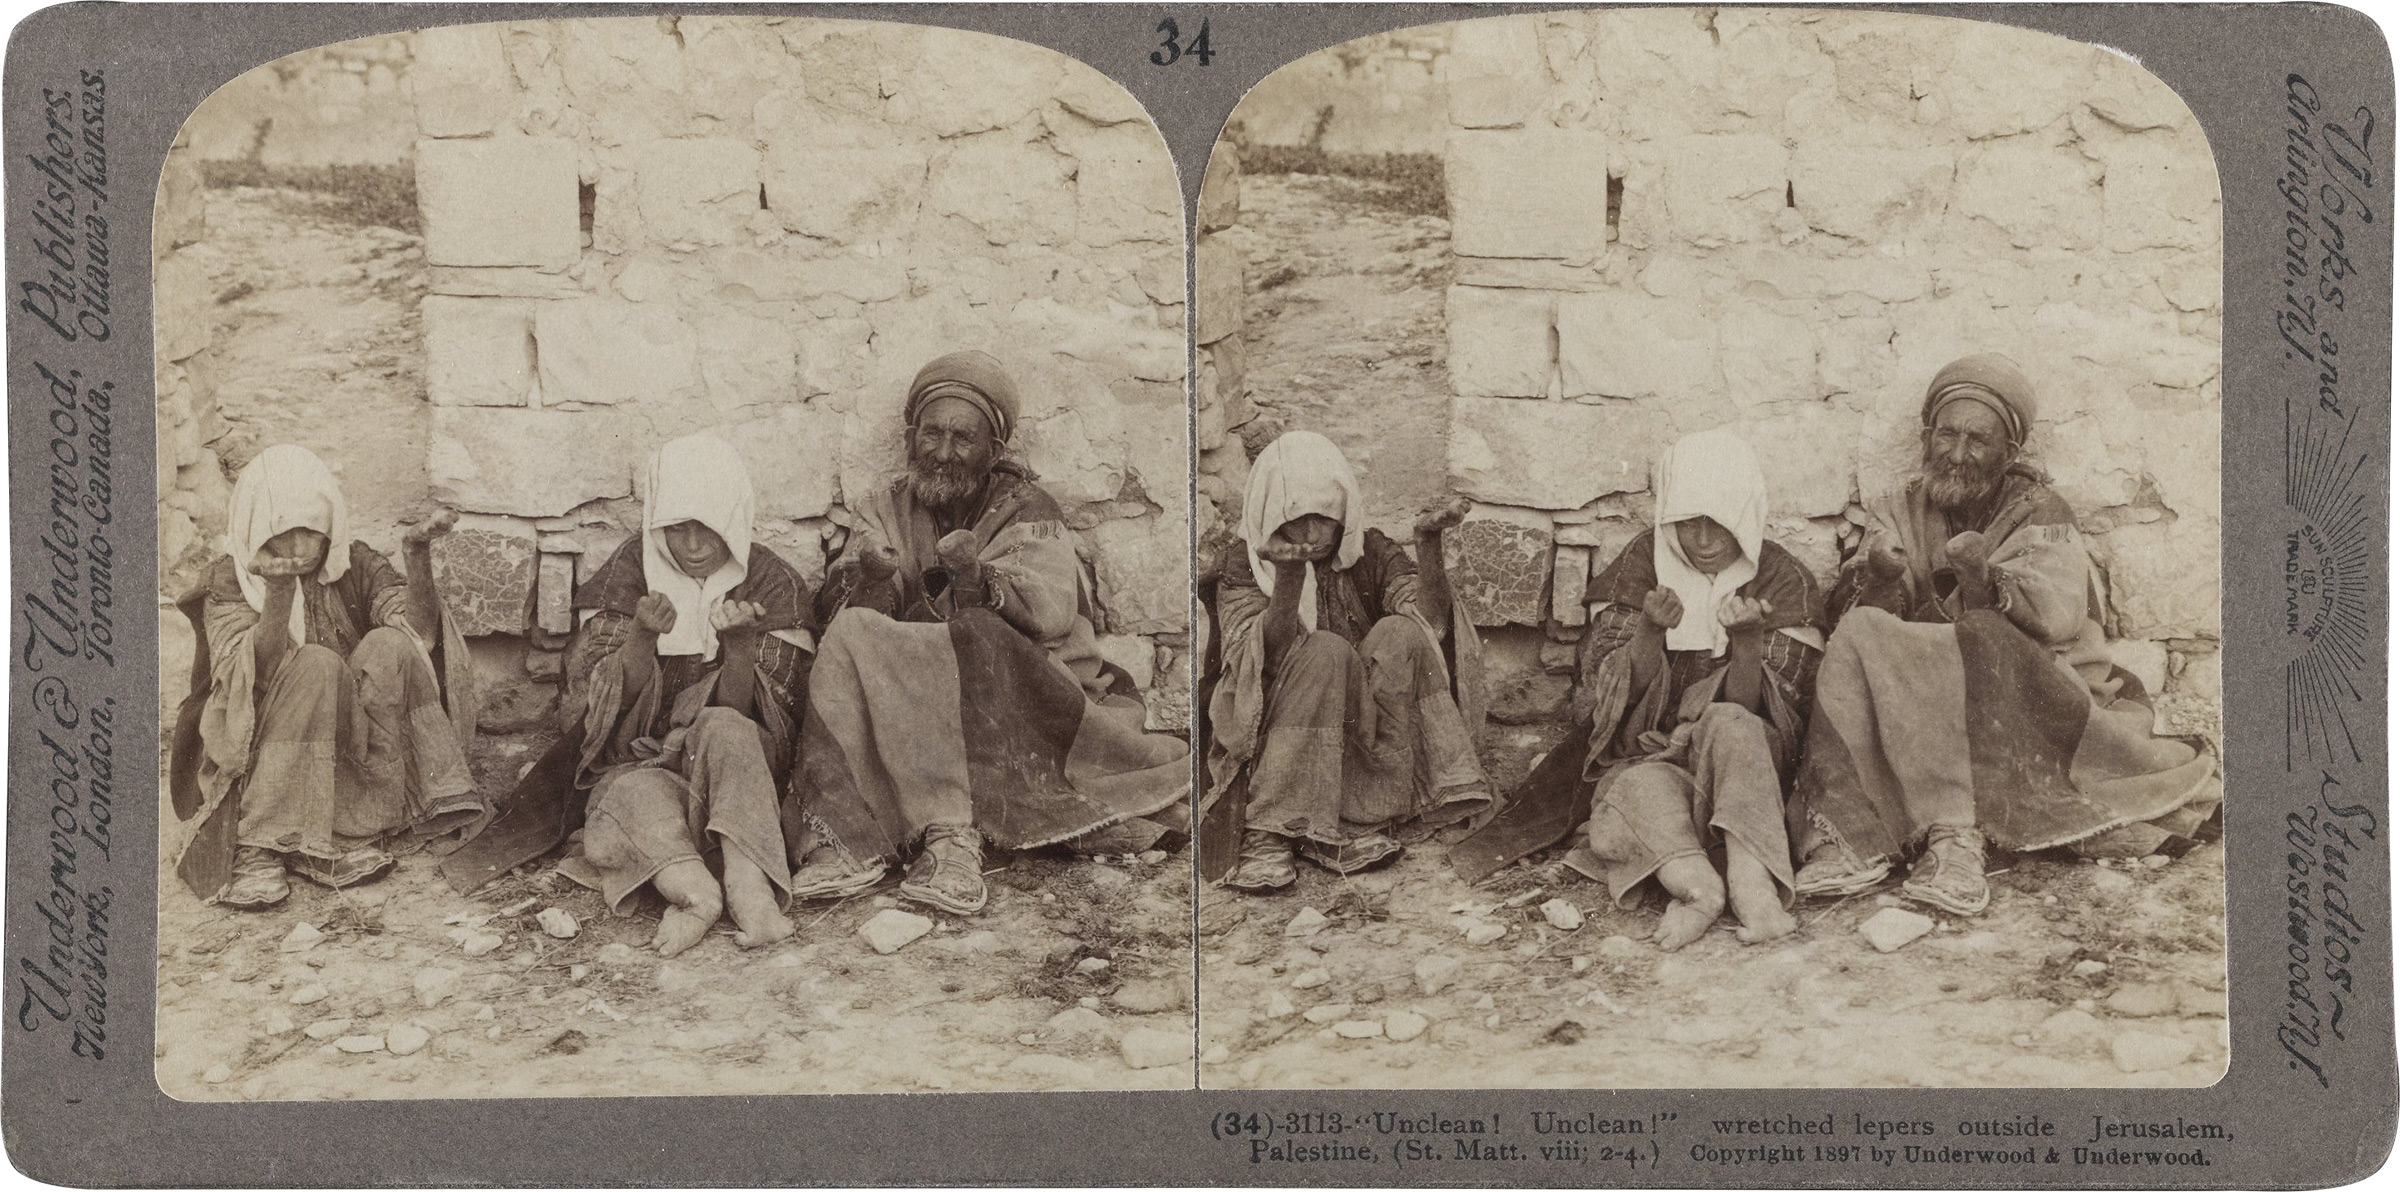 Photograph of lepers outside Jerusalem